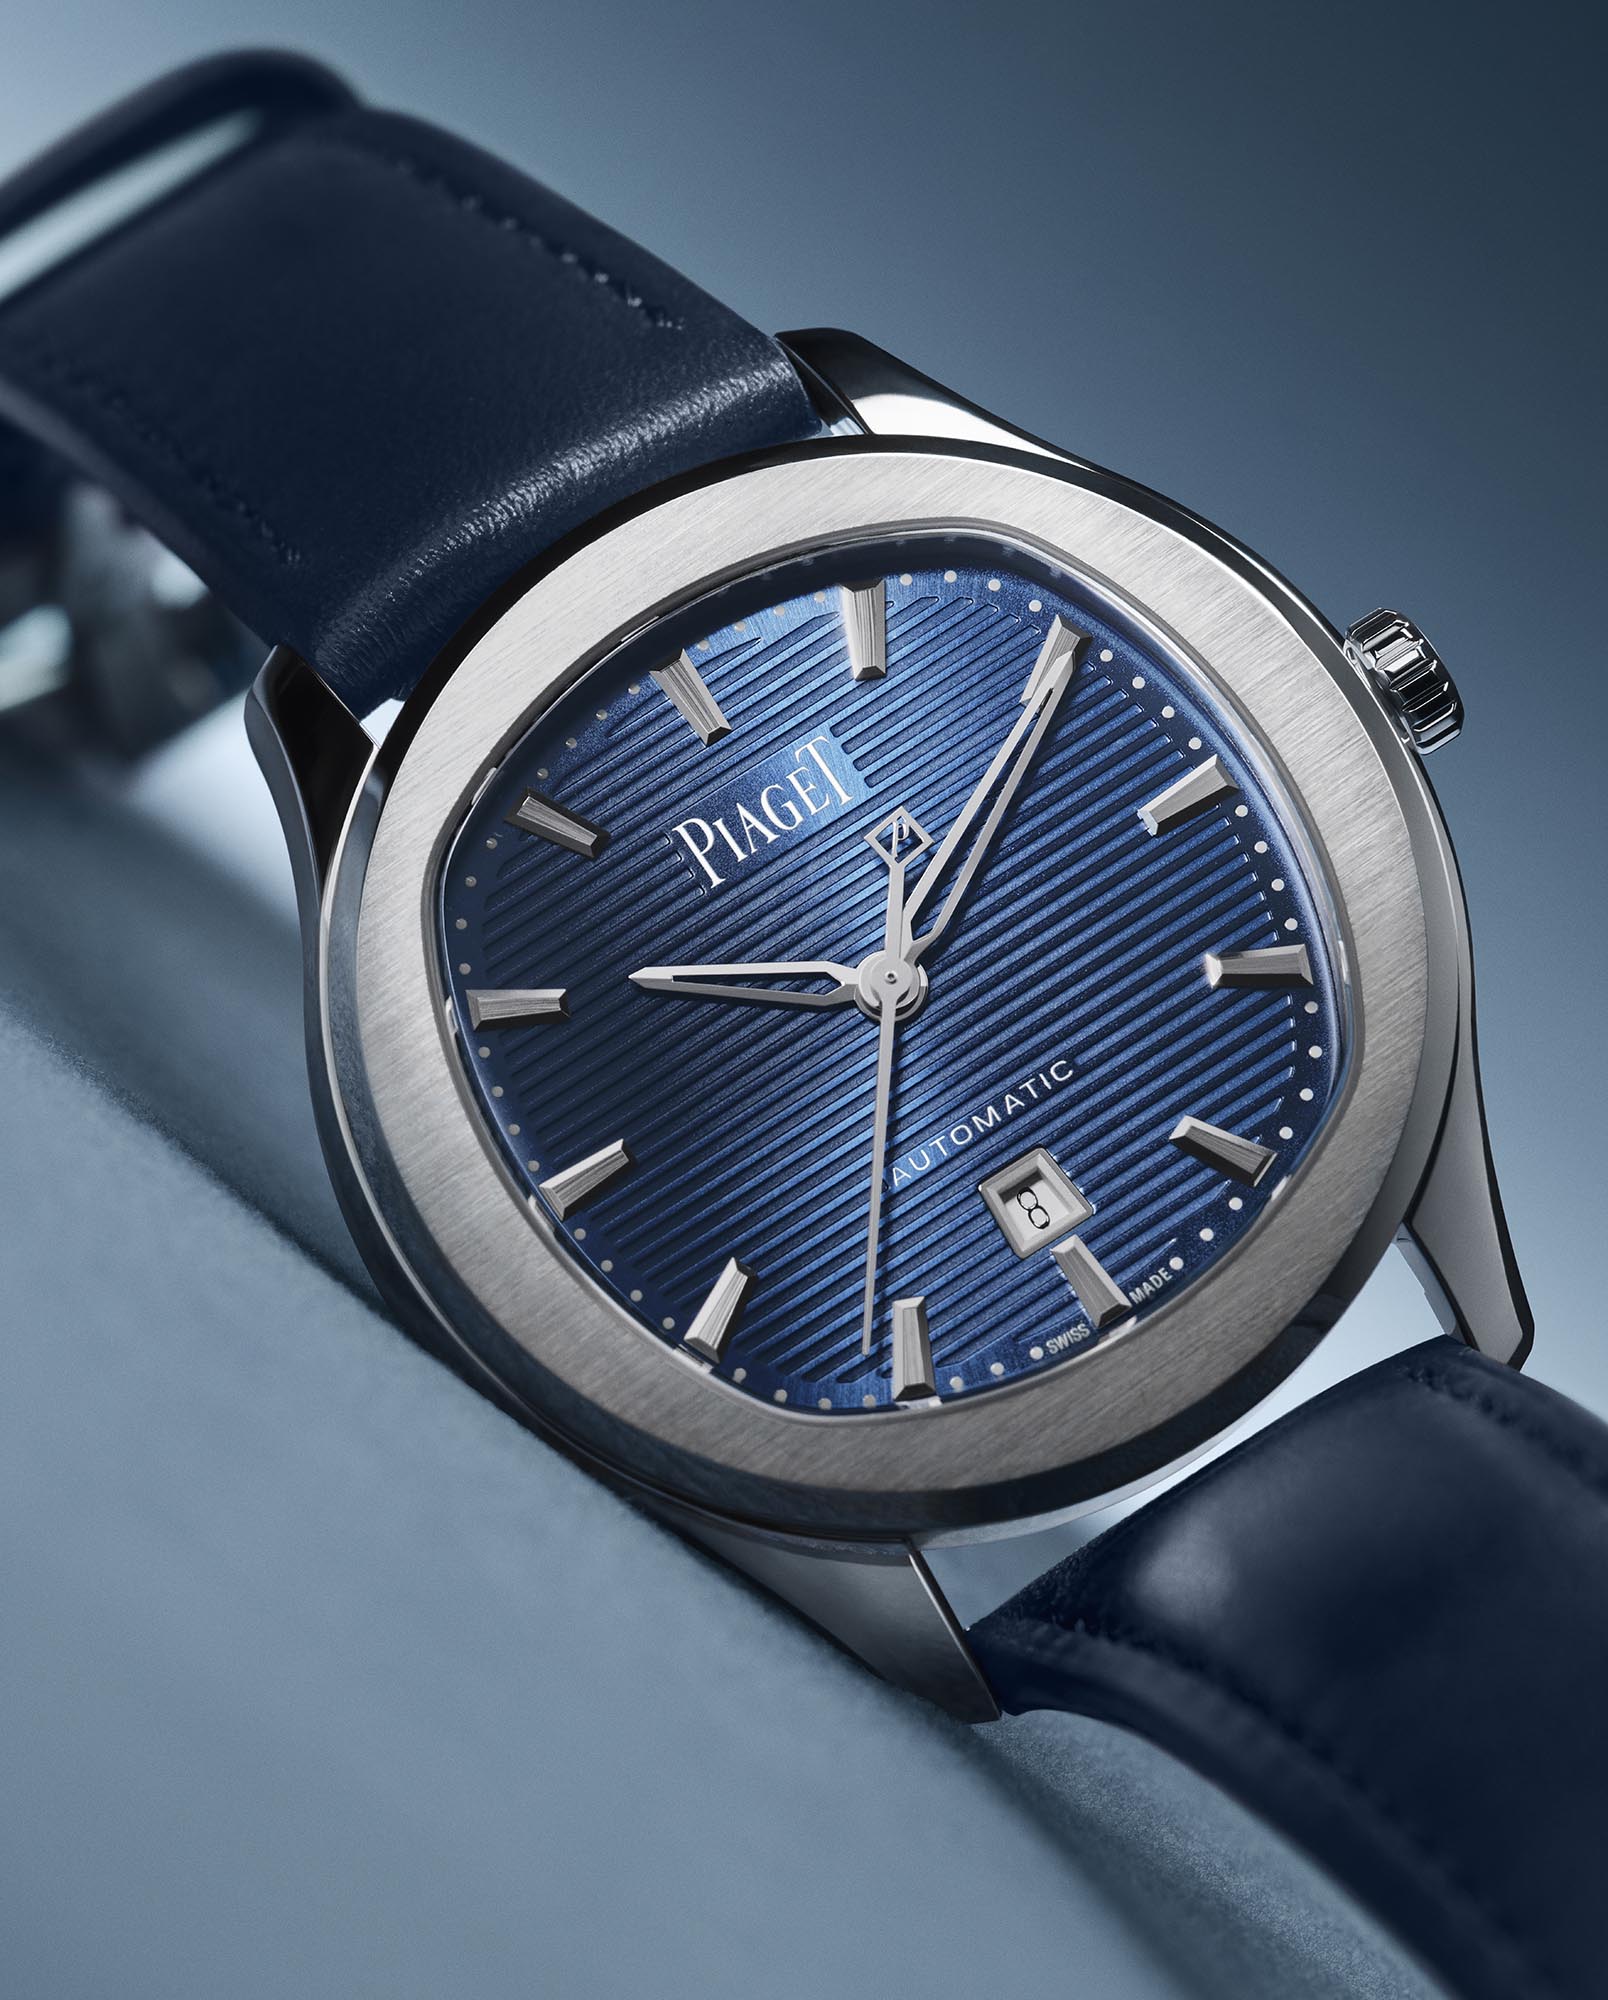 Piaget представляет 36-миллиметровые часы Polo Date